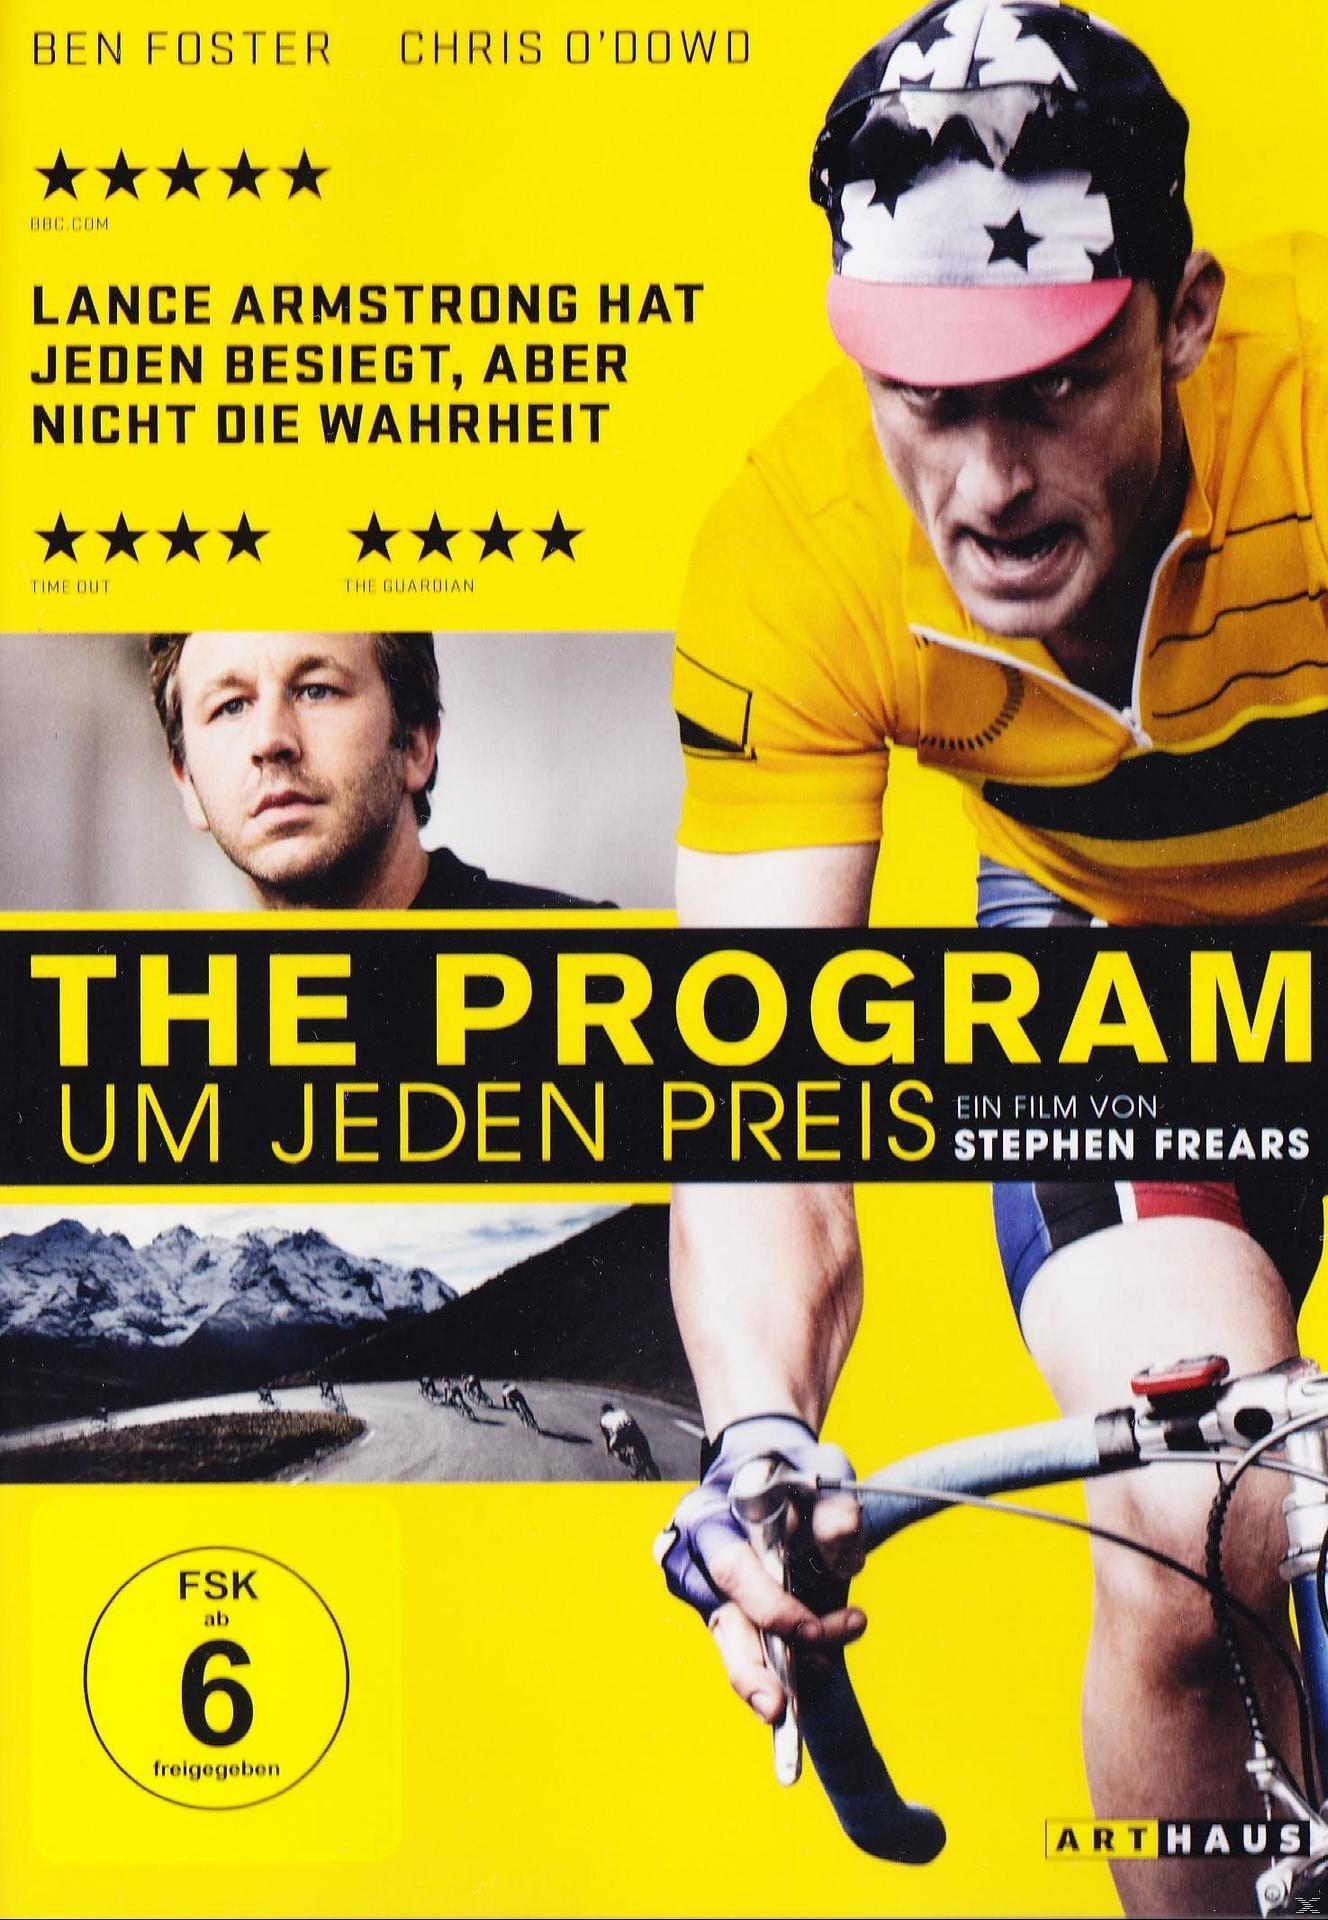 The Program - Um jeden DVD Preis